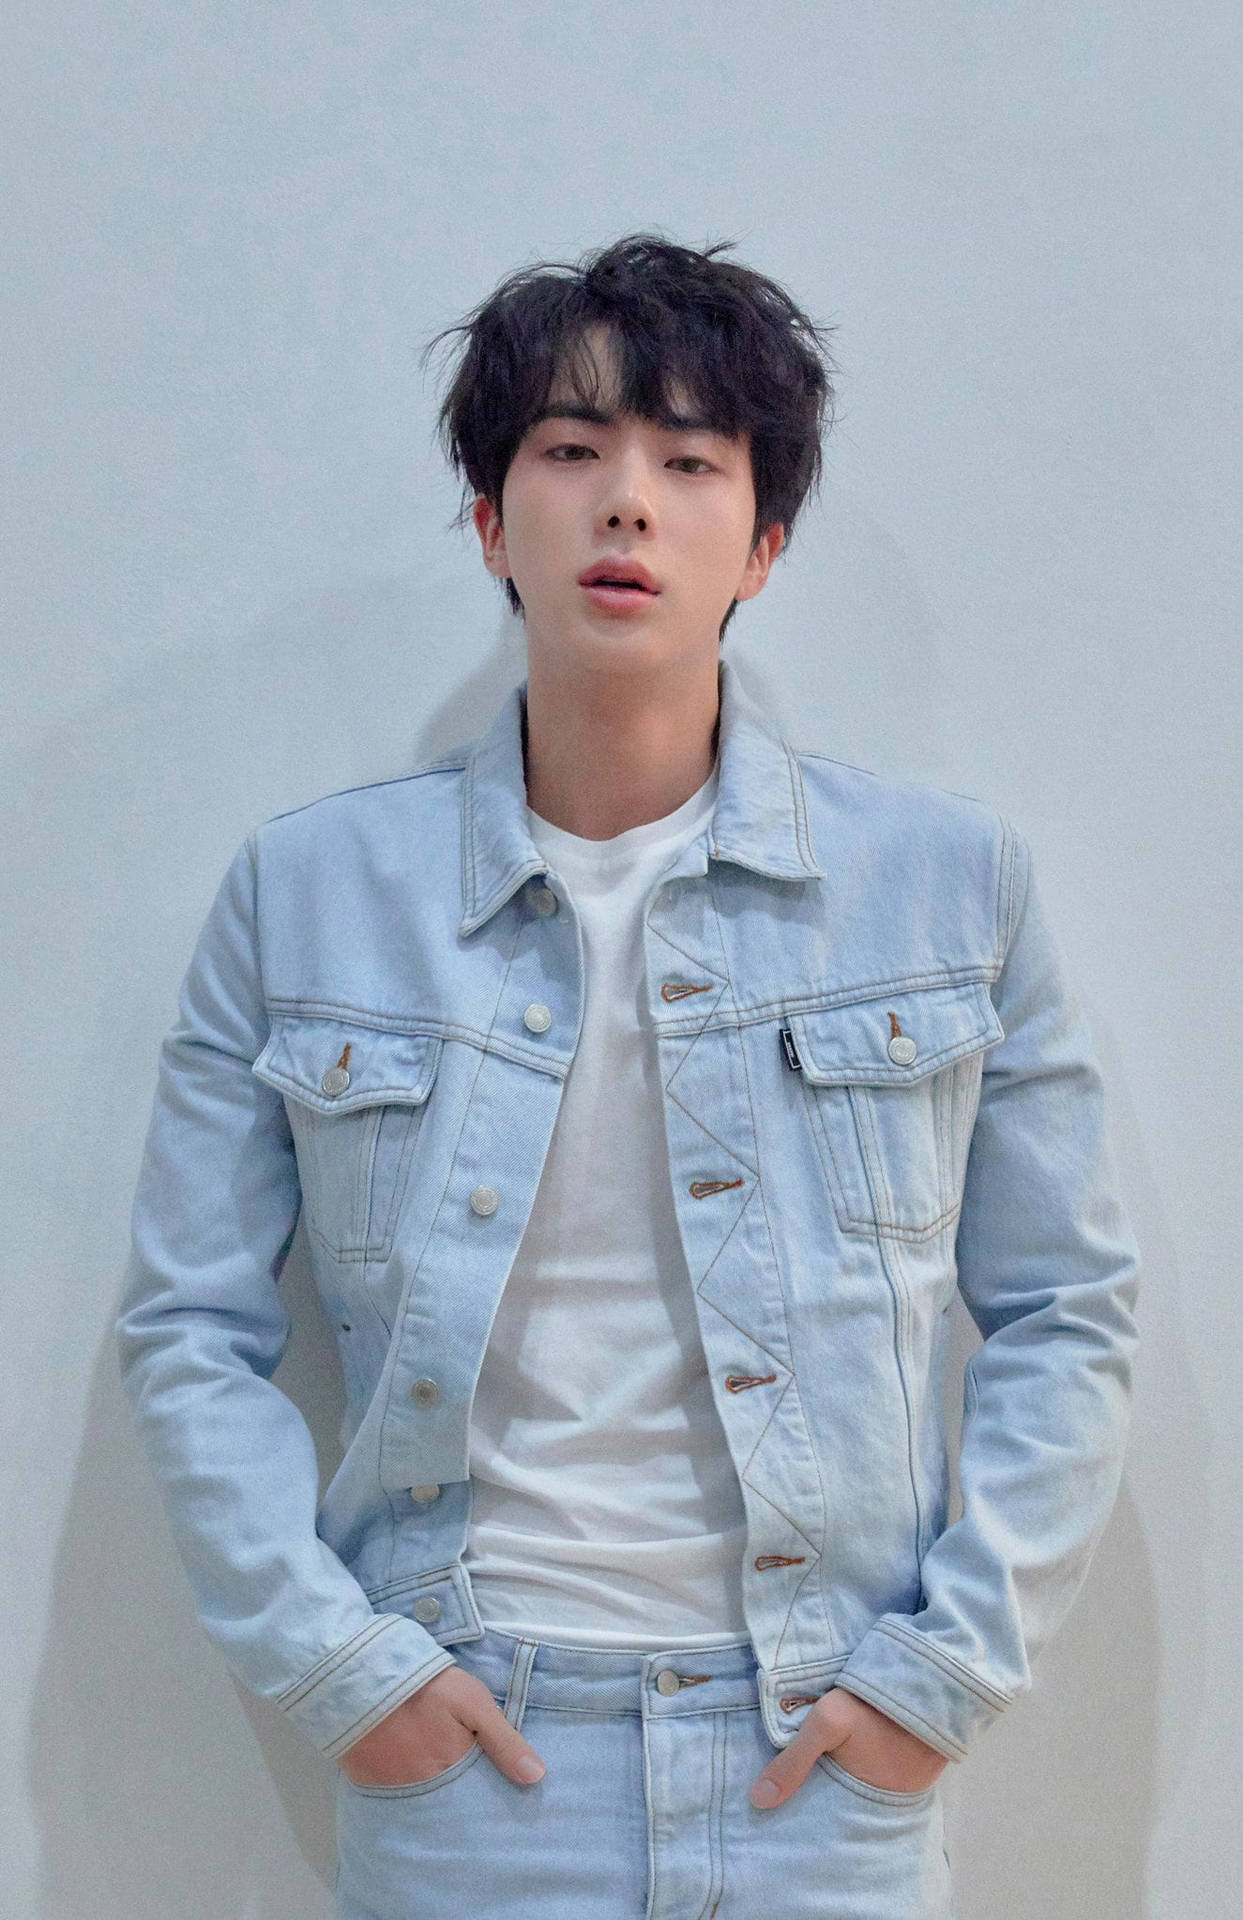 Kimseok Jin In Jeans Wallpaper